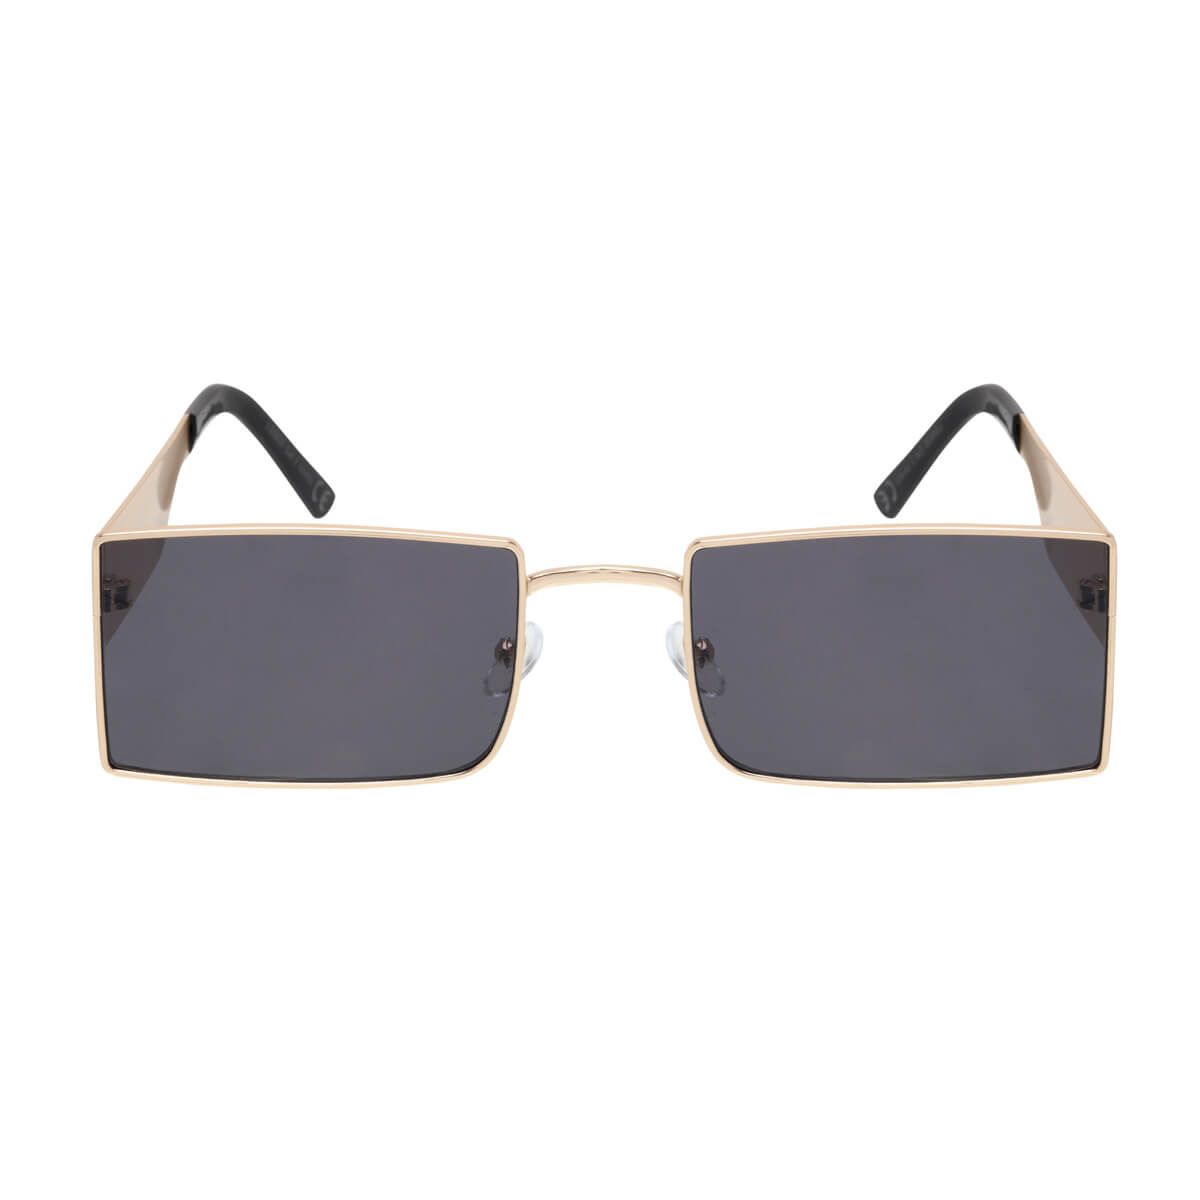 Rectangular sunglasses with metal frames